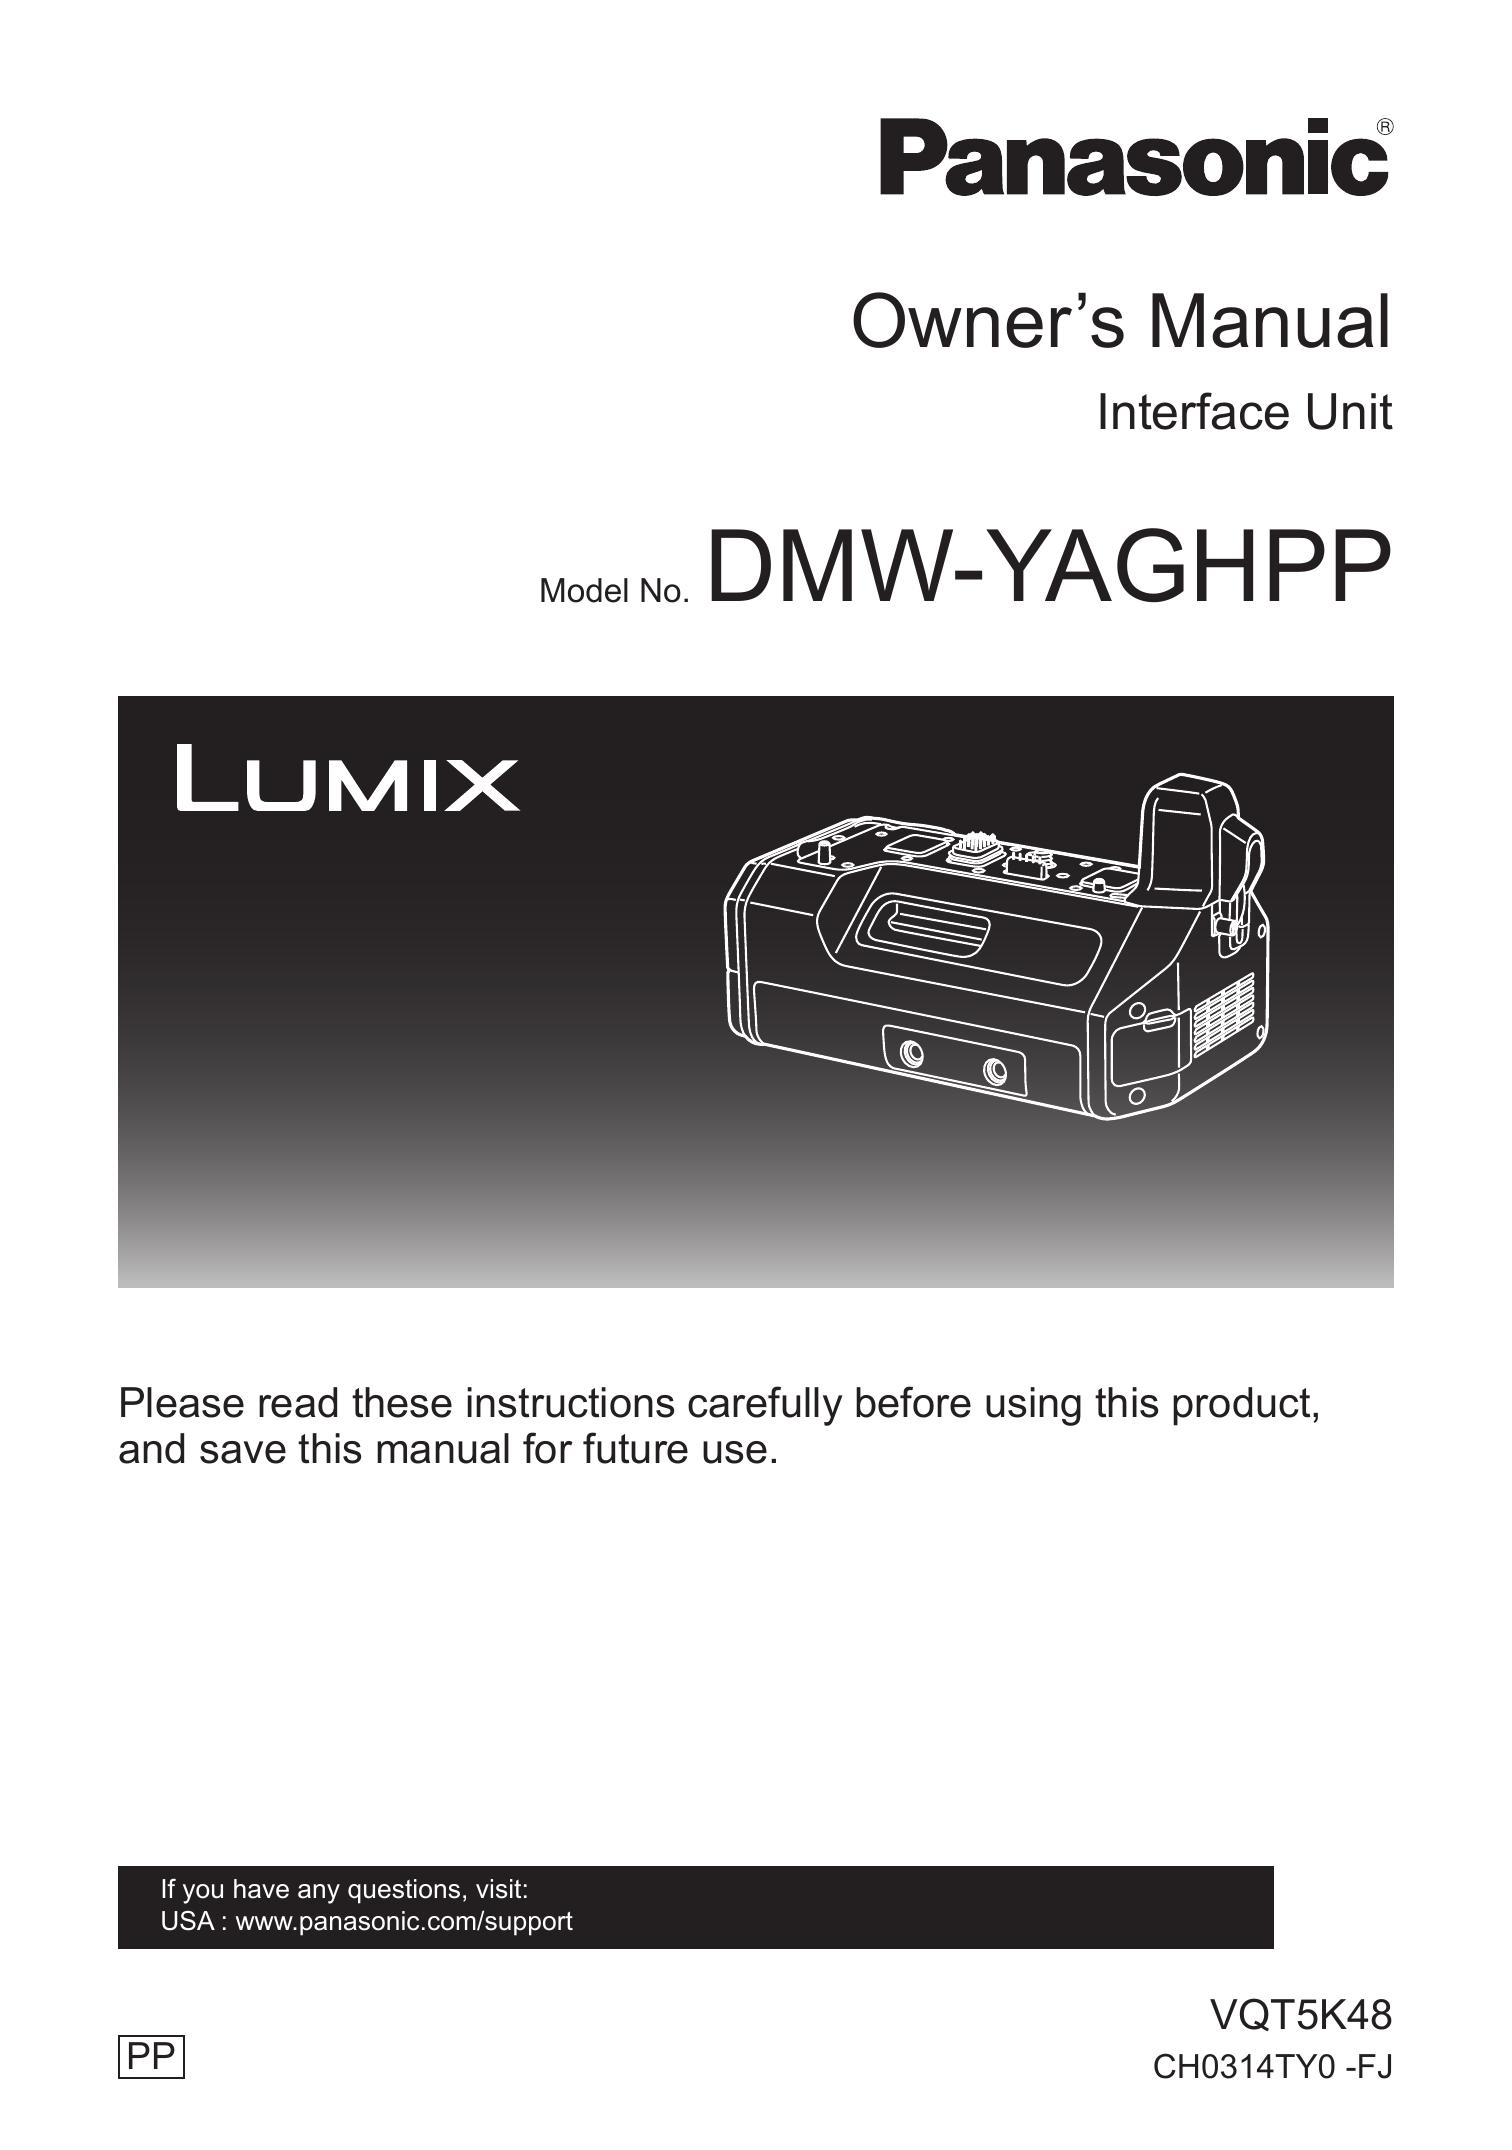 Panasonic DMW-YAGHPP Photo Scanner User Manual